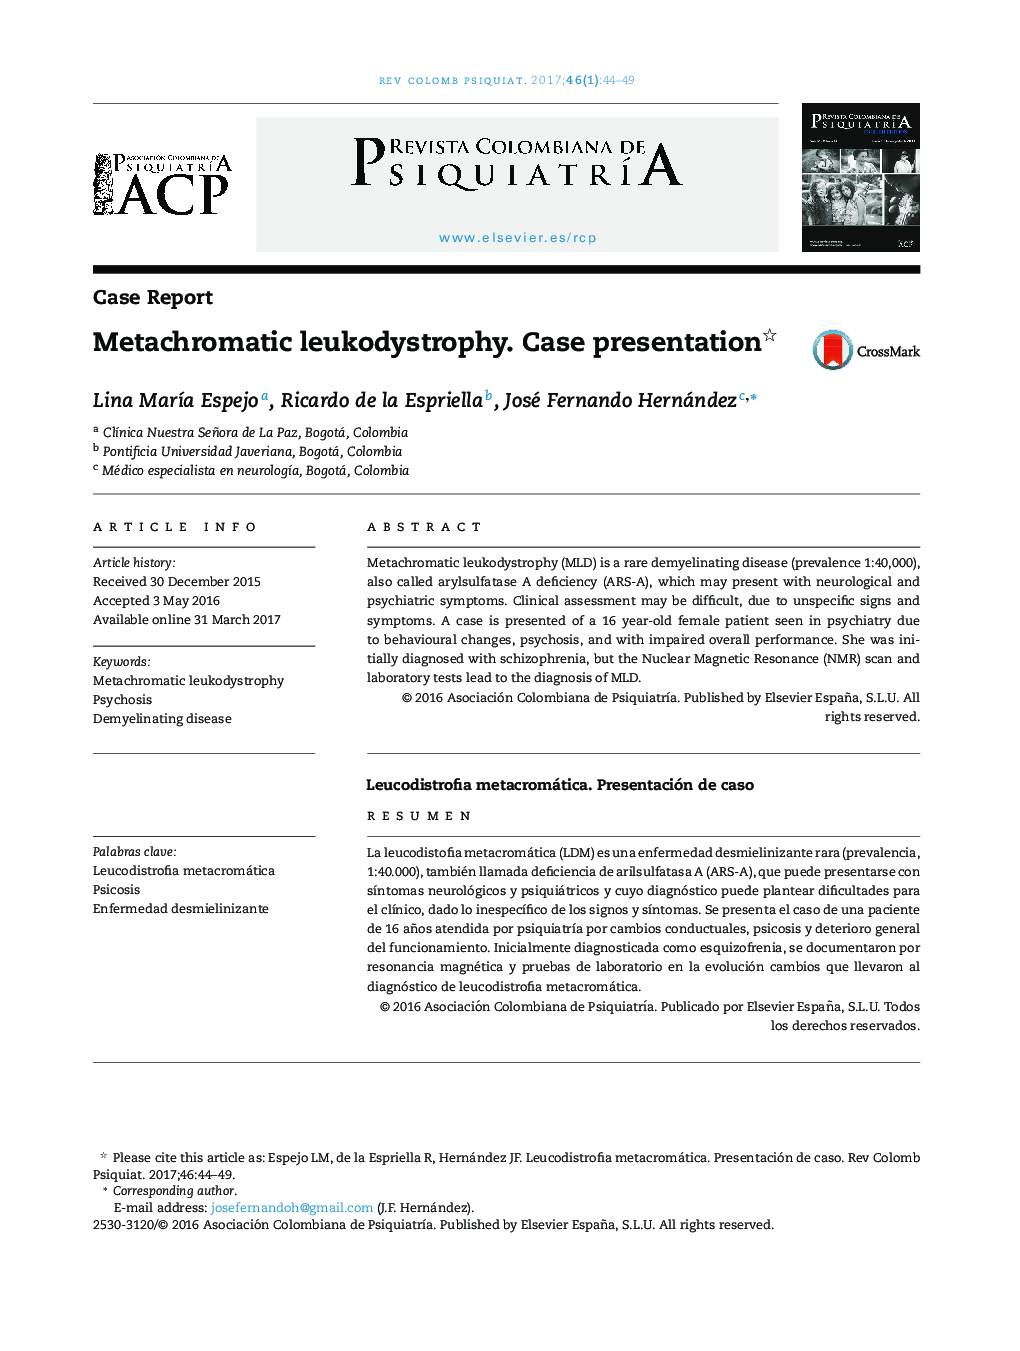 Metachromatic leukodystrophy. Case presentation